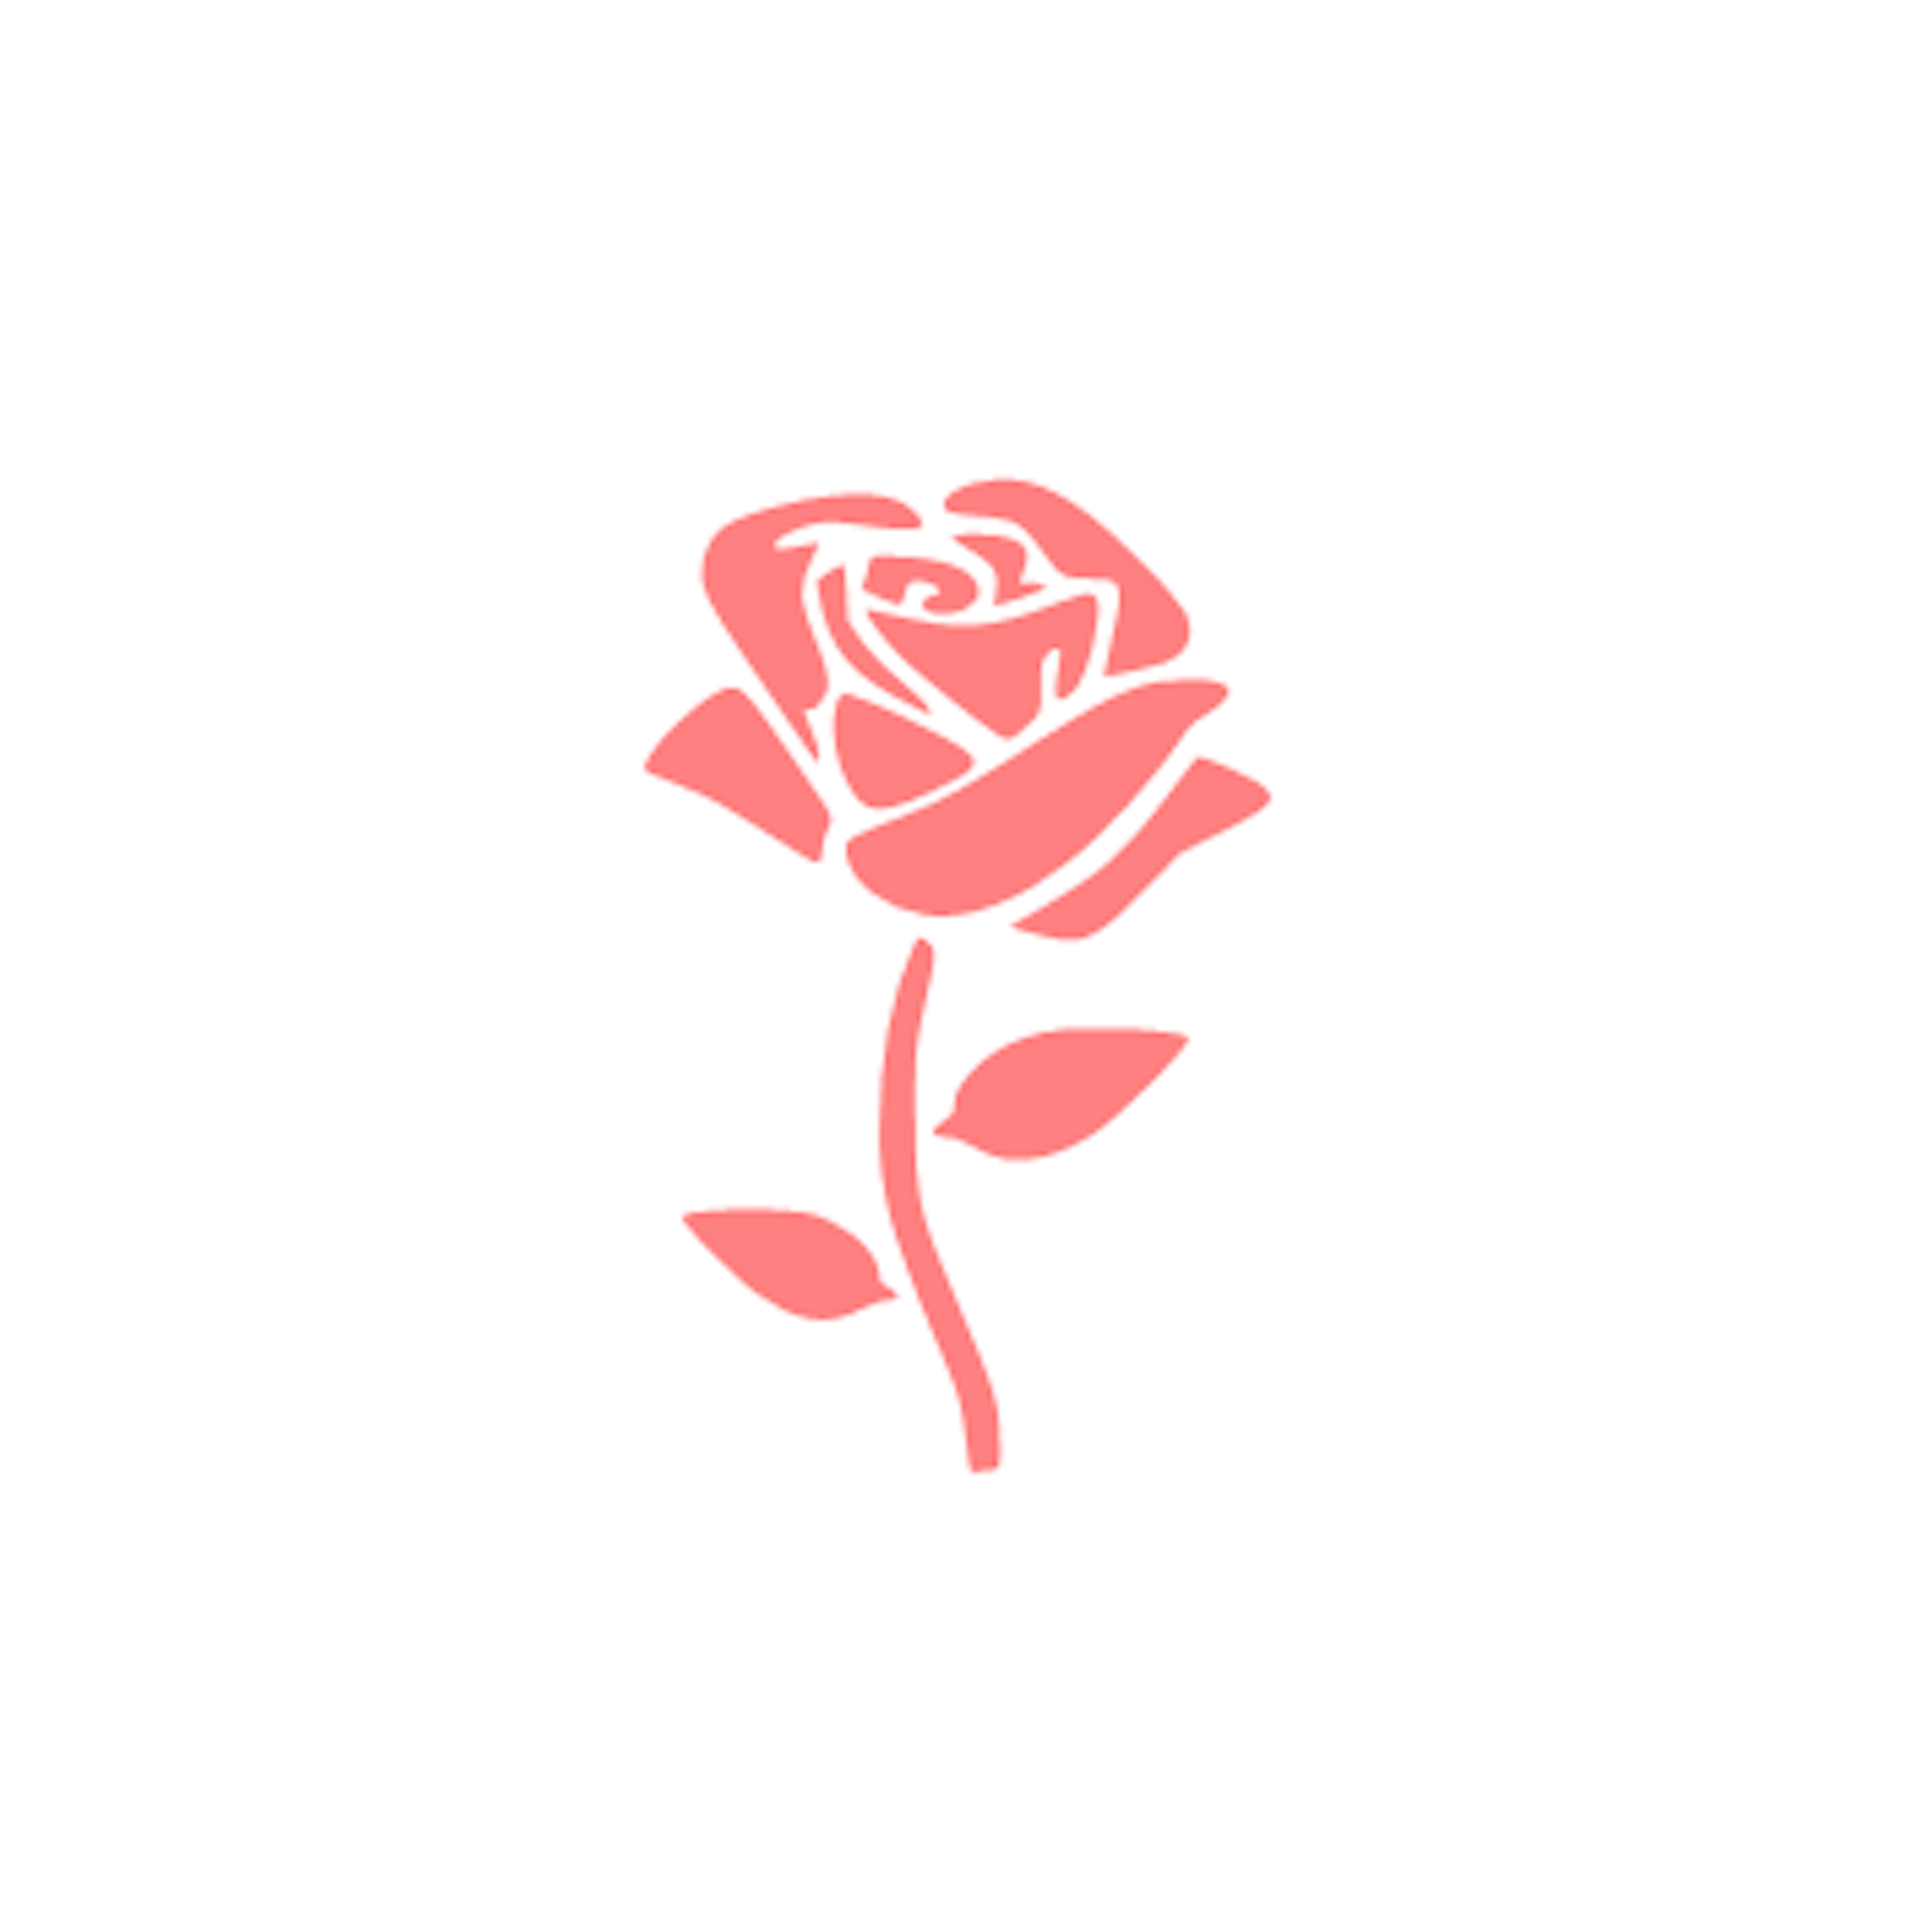 Lancome Rose Logo - Rose on Stem Stencil. Design. Flower logo, Logos, Stencils